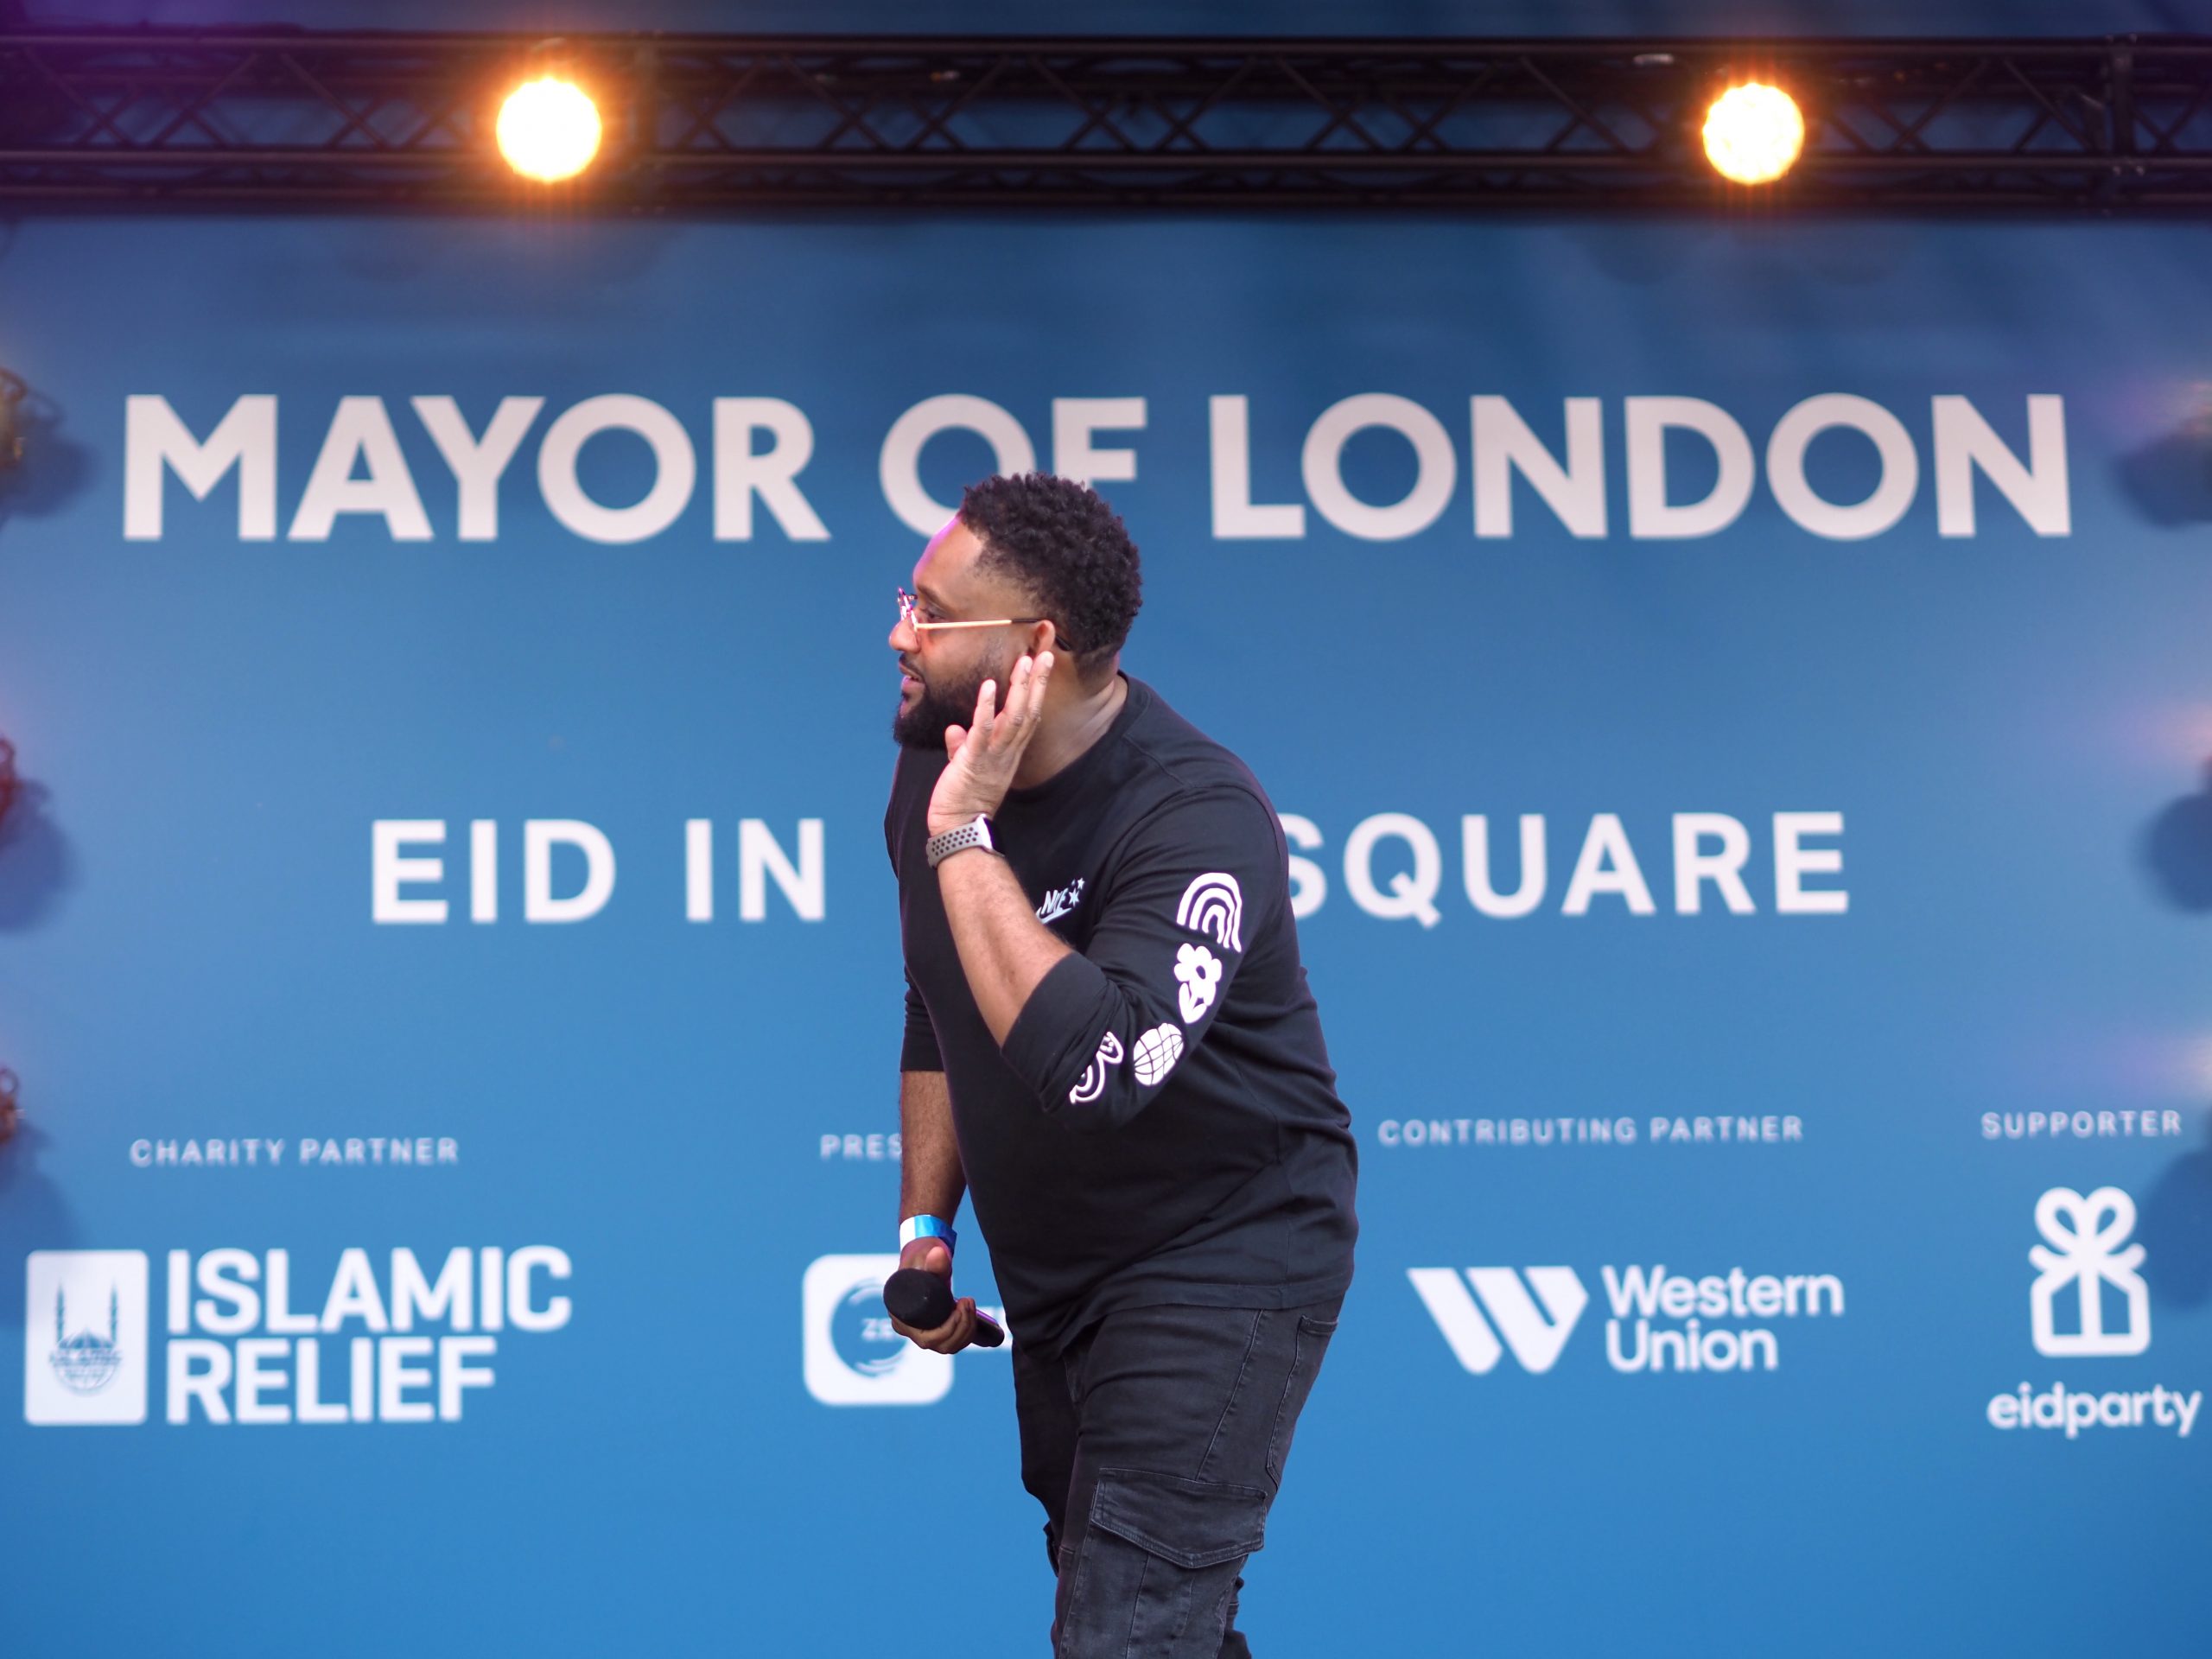 `Eid Al-Fitr in Trafalgar Square: Memorable Event Lasting a Lifetime - About Islam